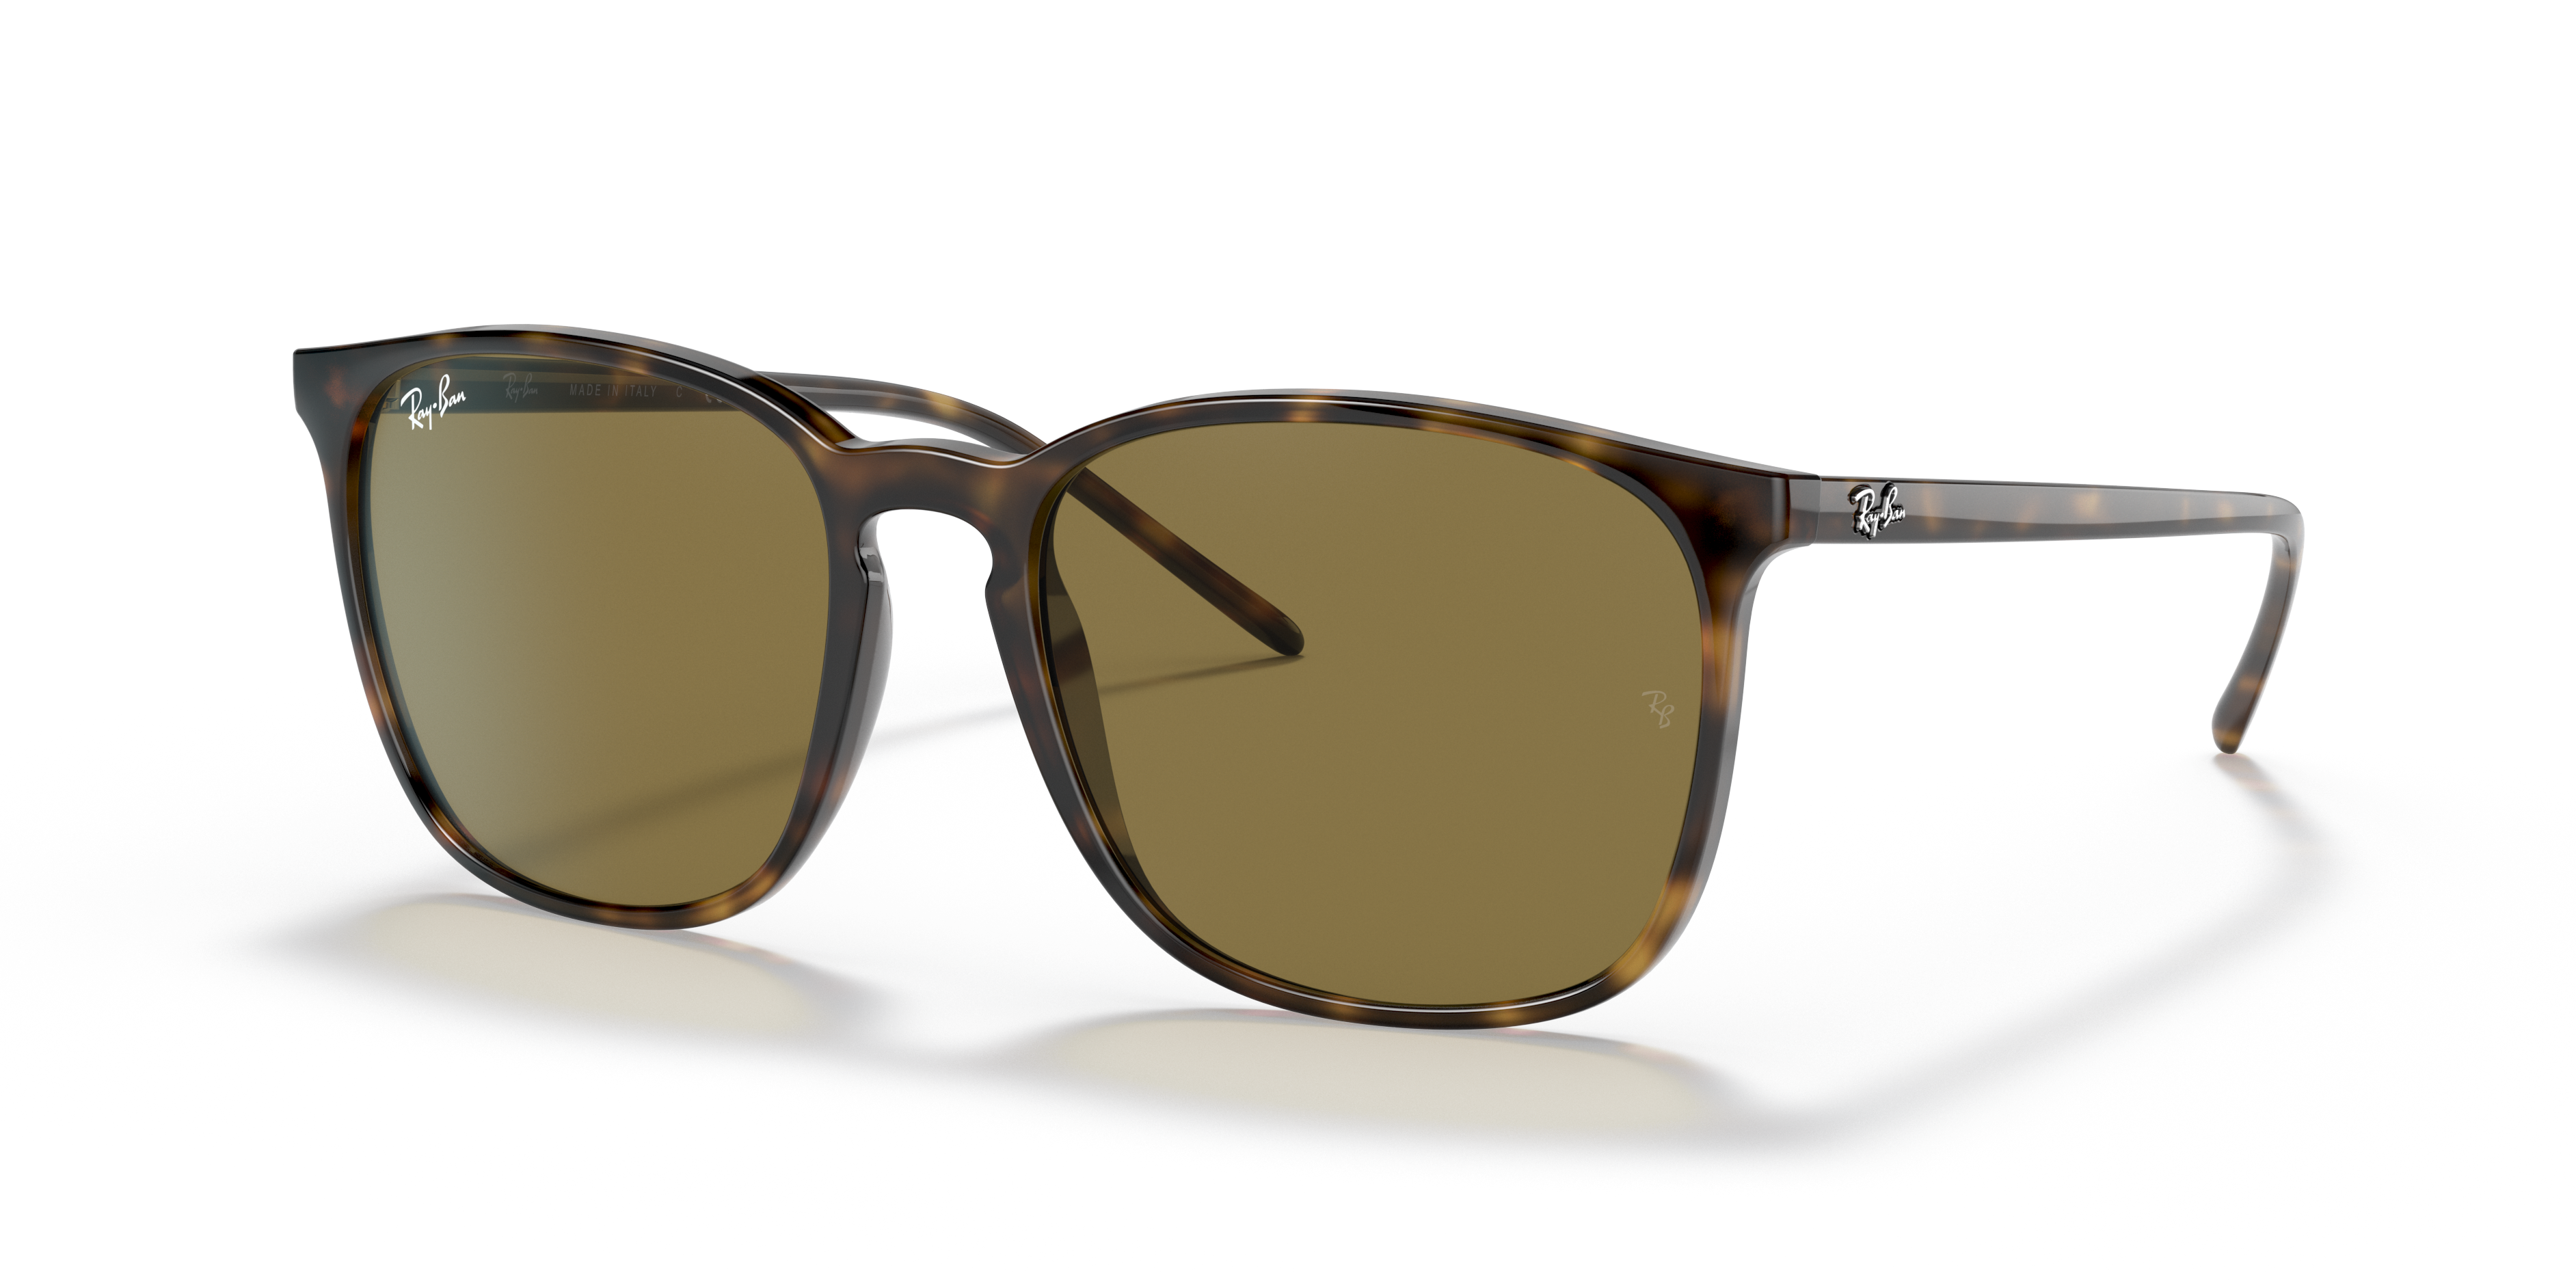 Rb4387 Sunglasses in Light Havana and Dark Brown | Ray-Ban®